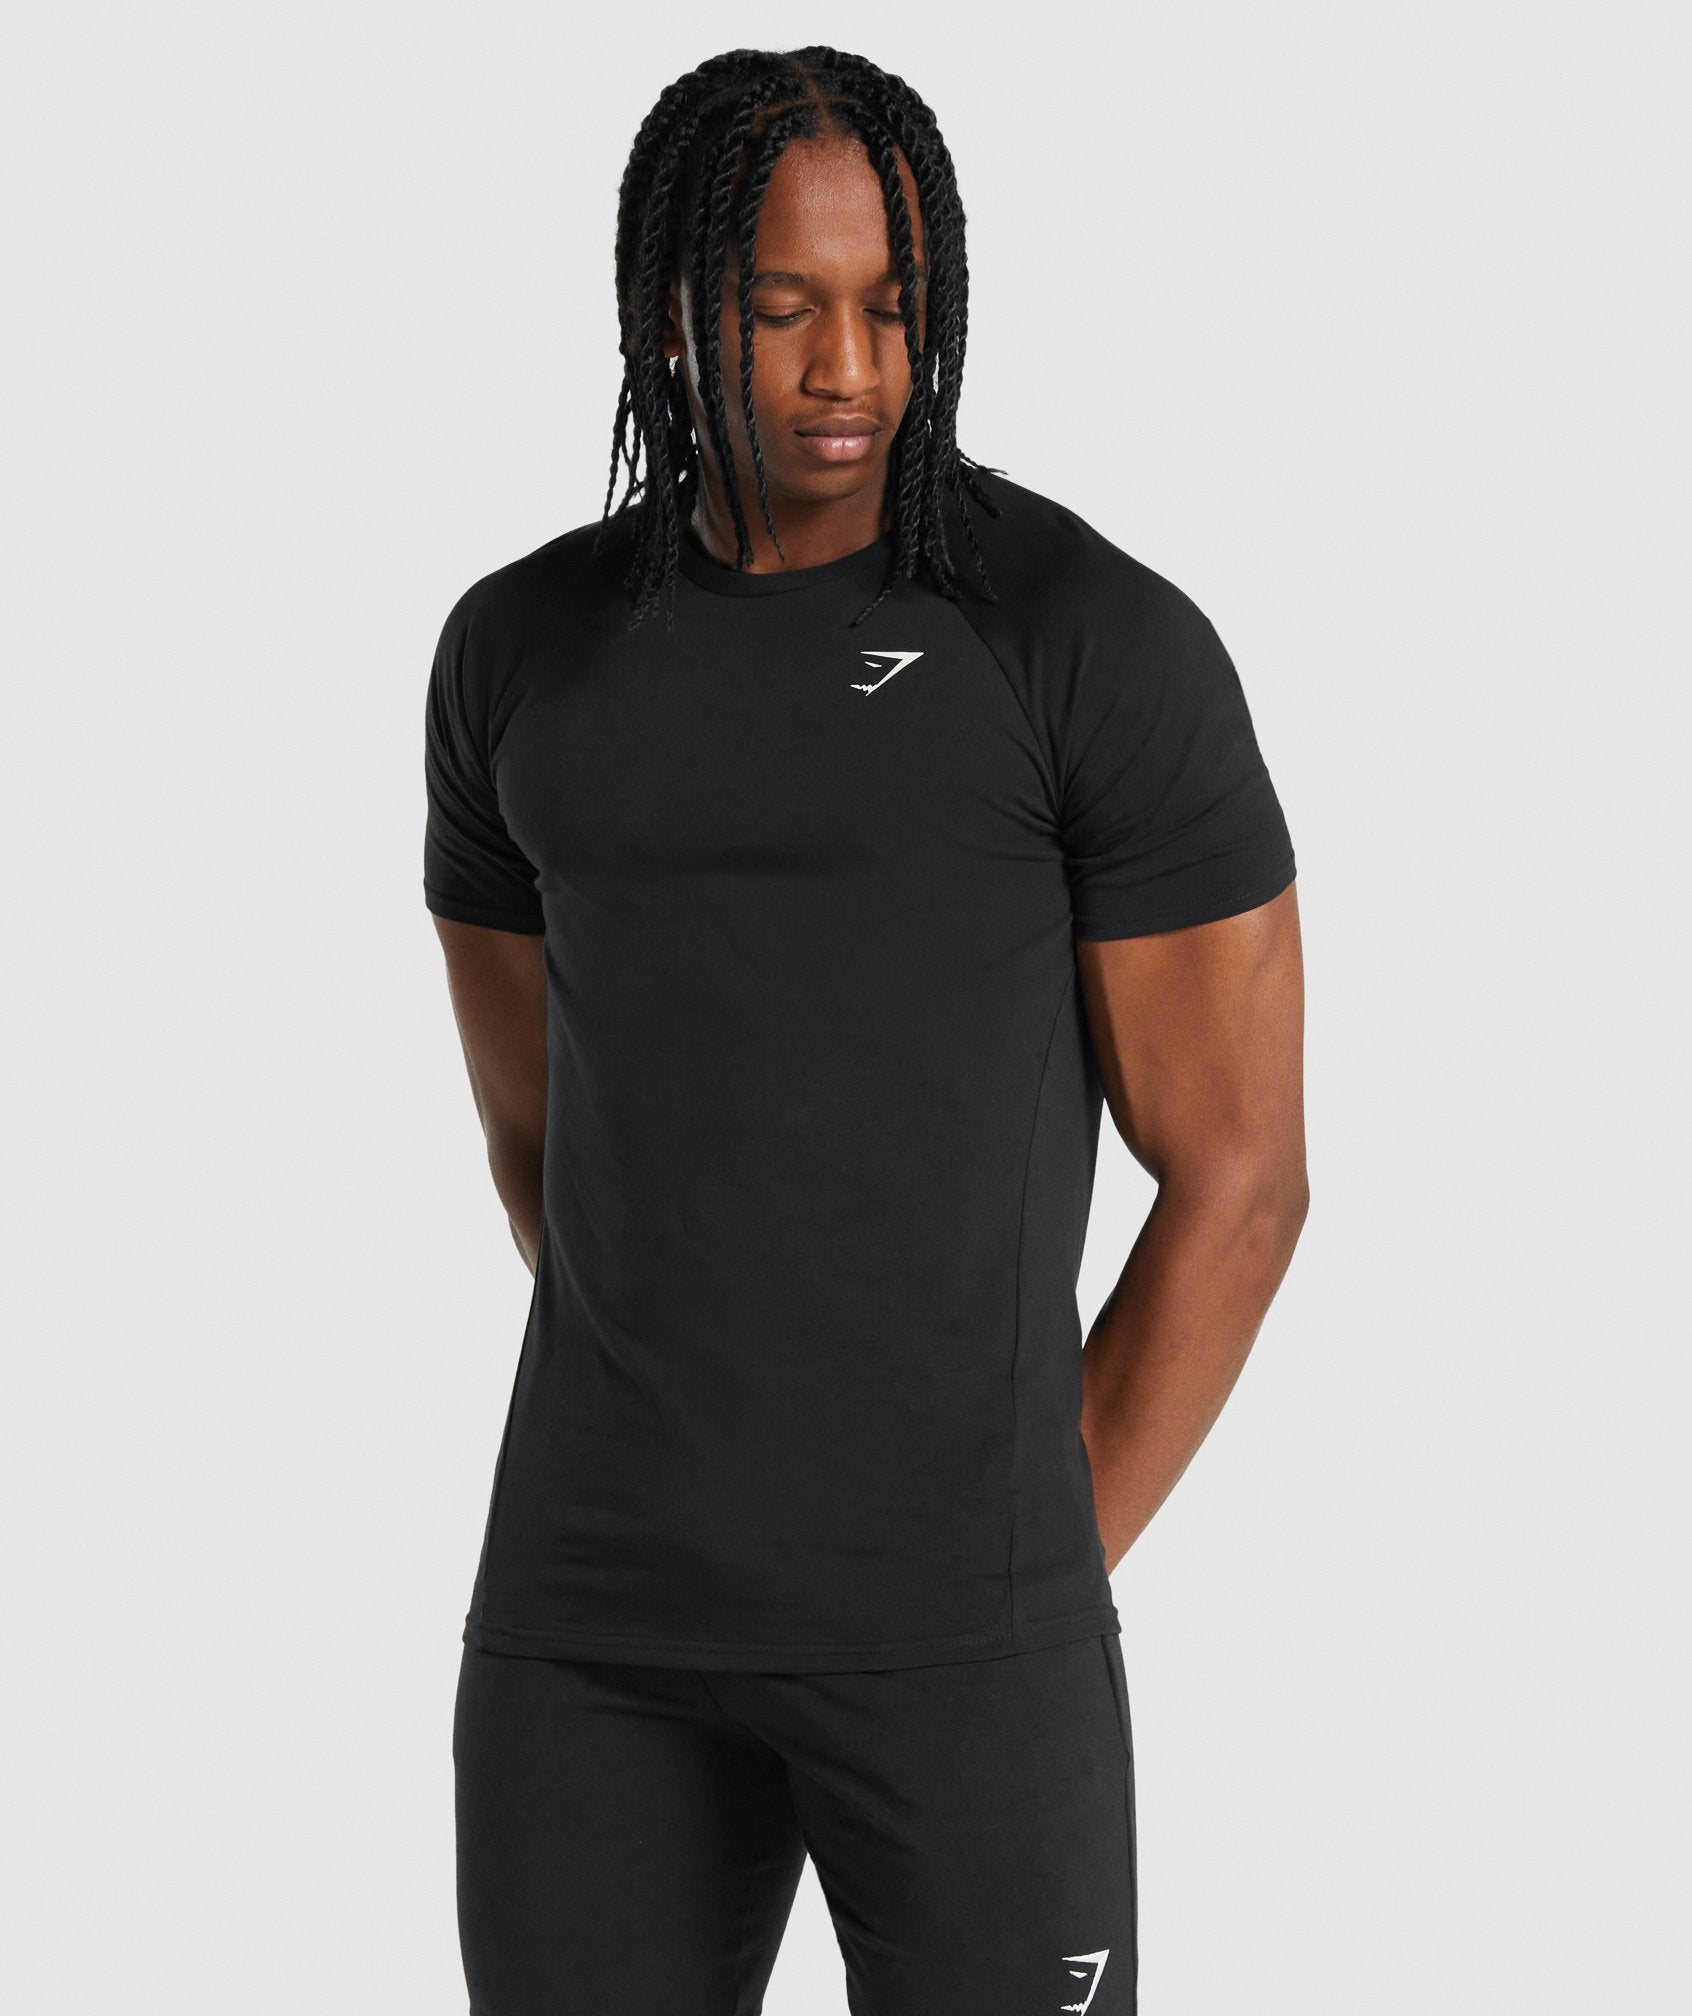 LIMITED EDITION] Gymshark Black Onyx 2.0 gym shirt, Men's Fashion